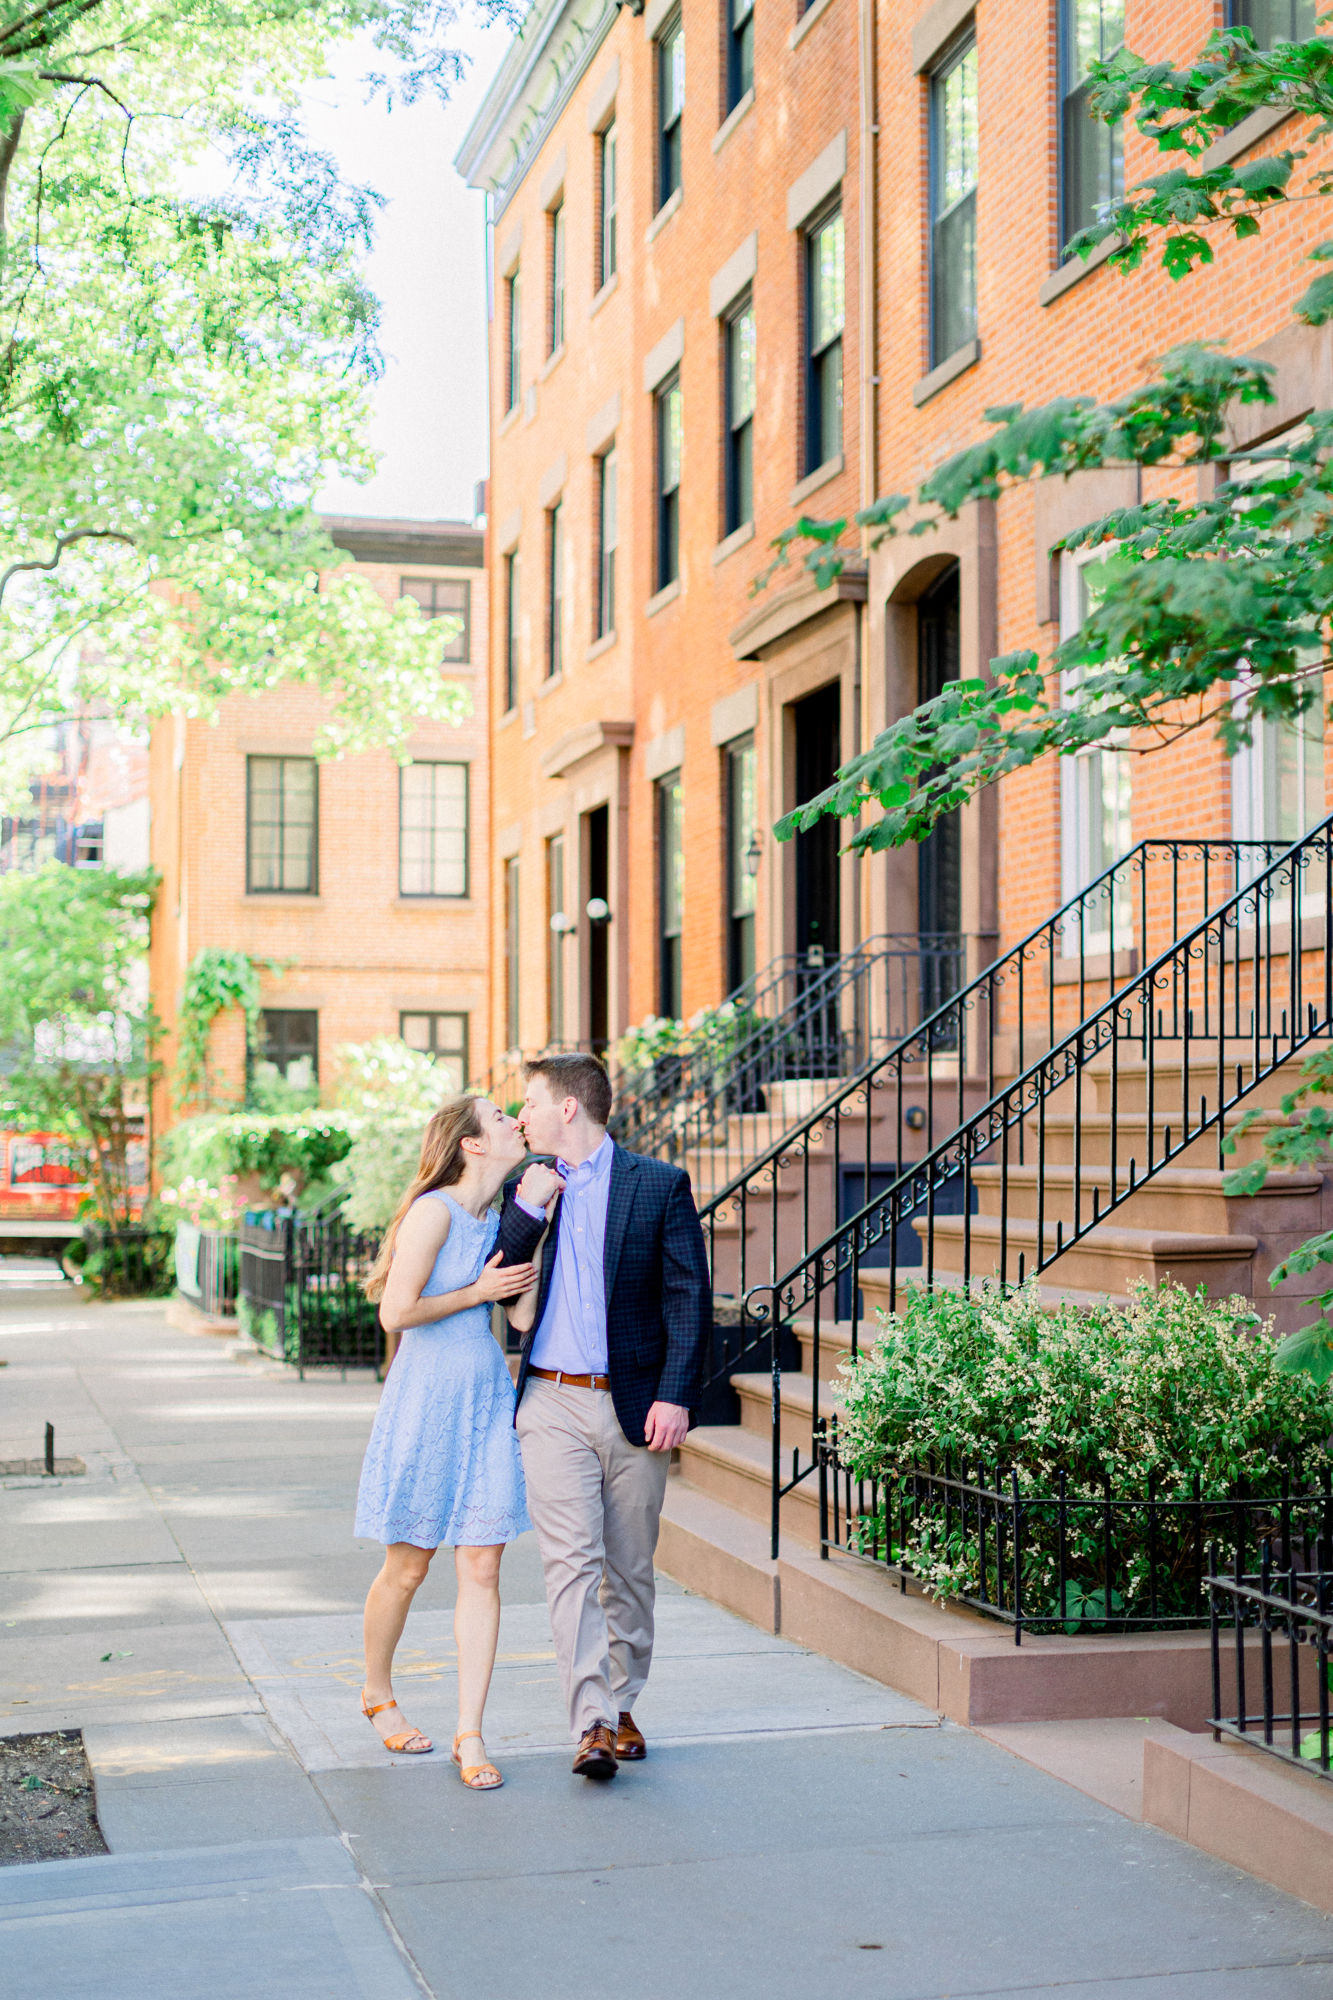 Enchanting Brooklyn Heights Promenade Engagement Photography